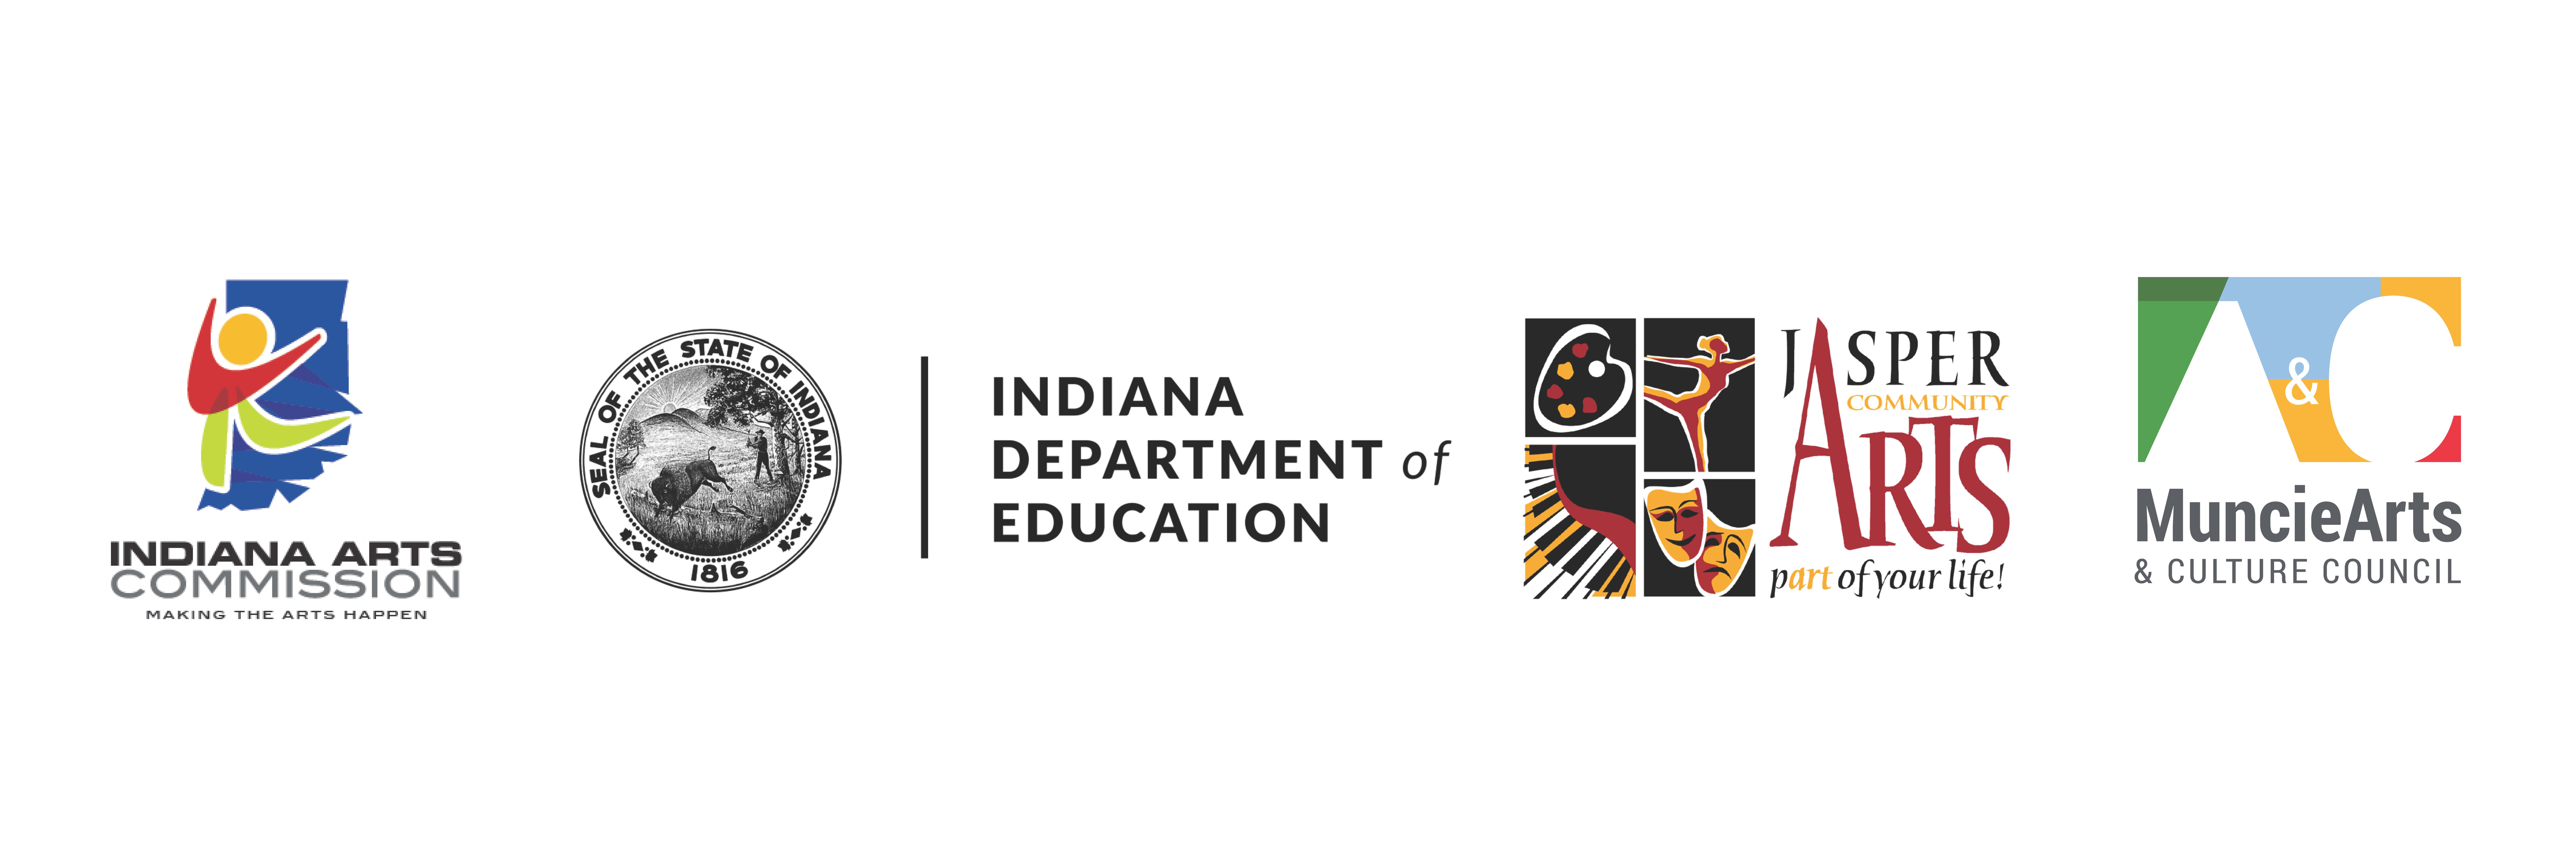 Logos of the IAC, Department of Education, Jasper Community Arts, and Muncie Arts and Culture Council